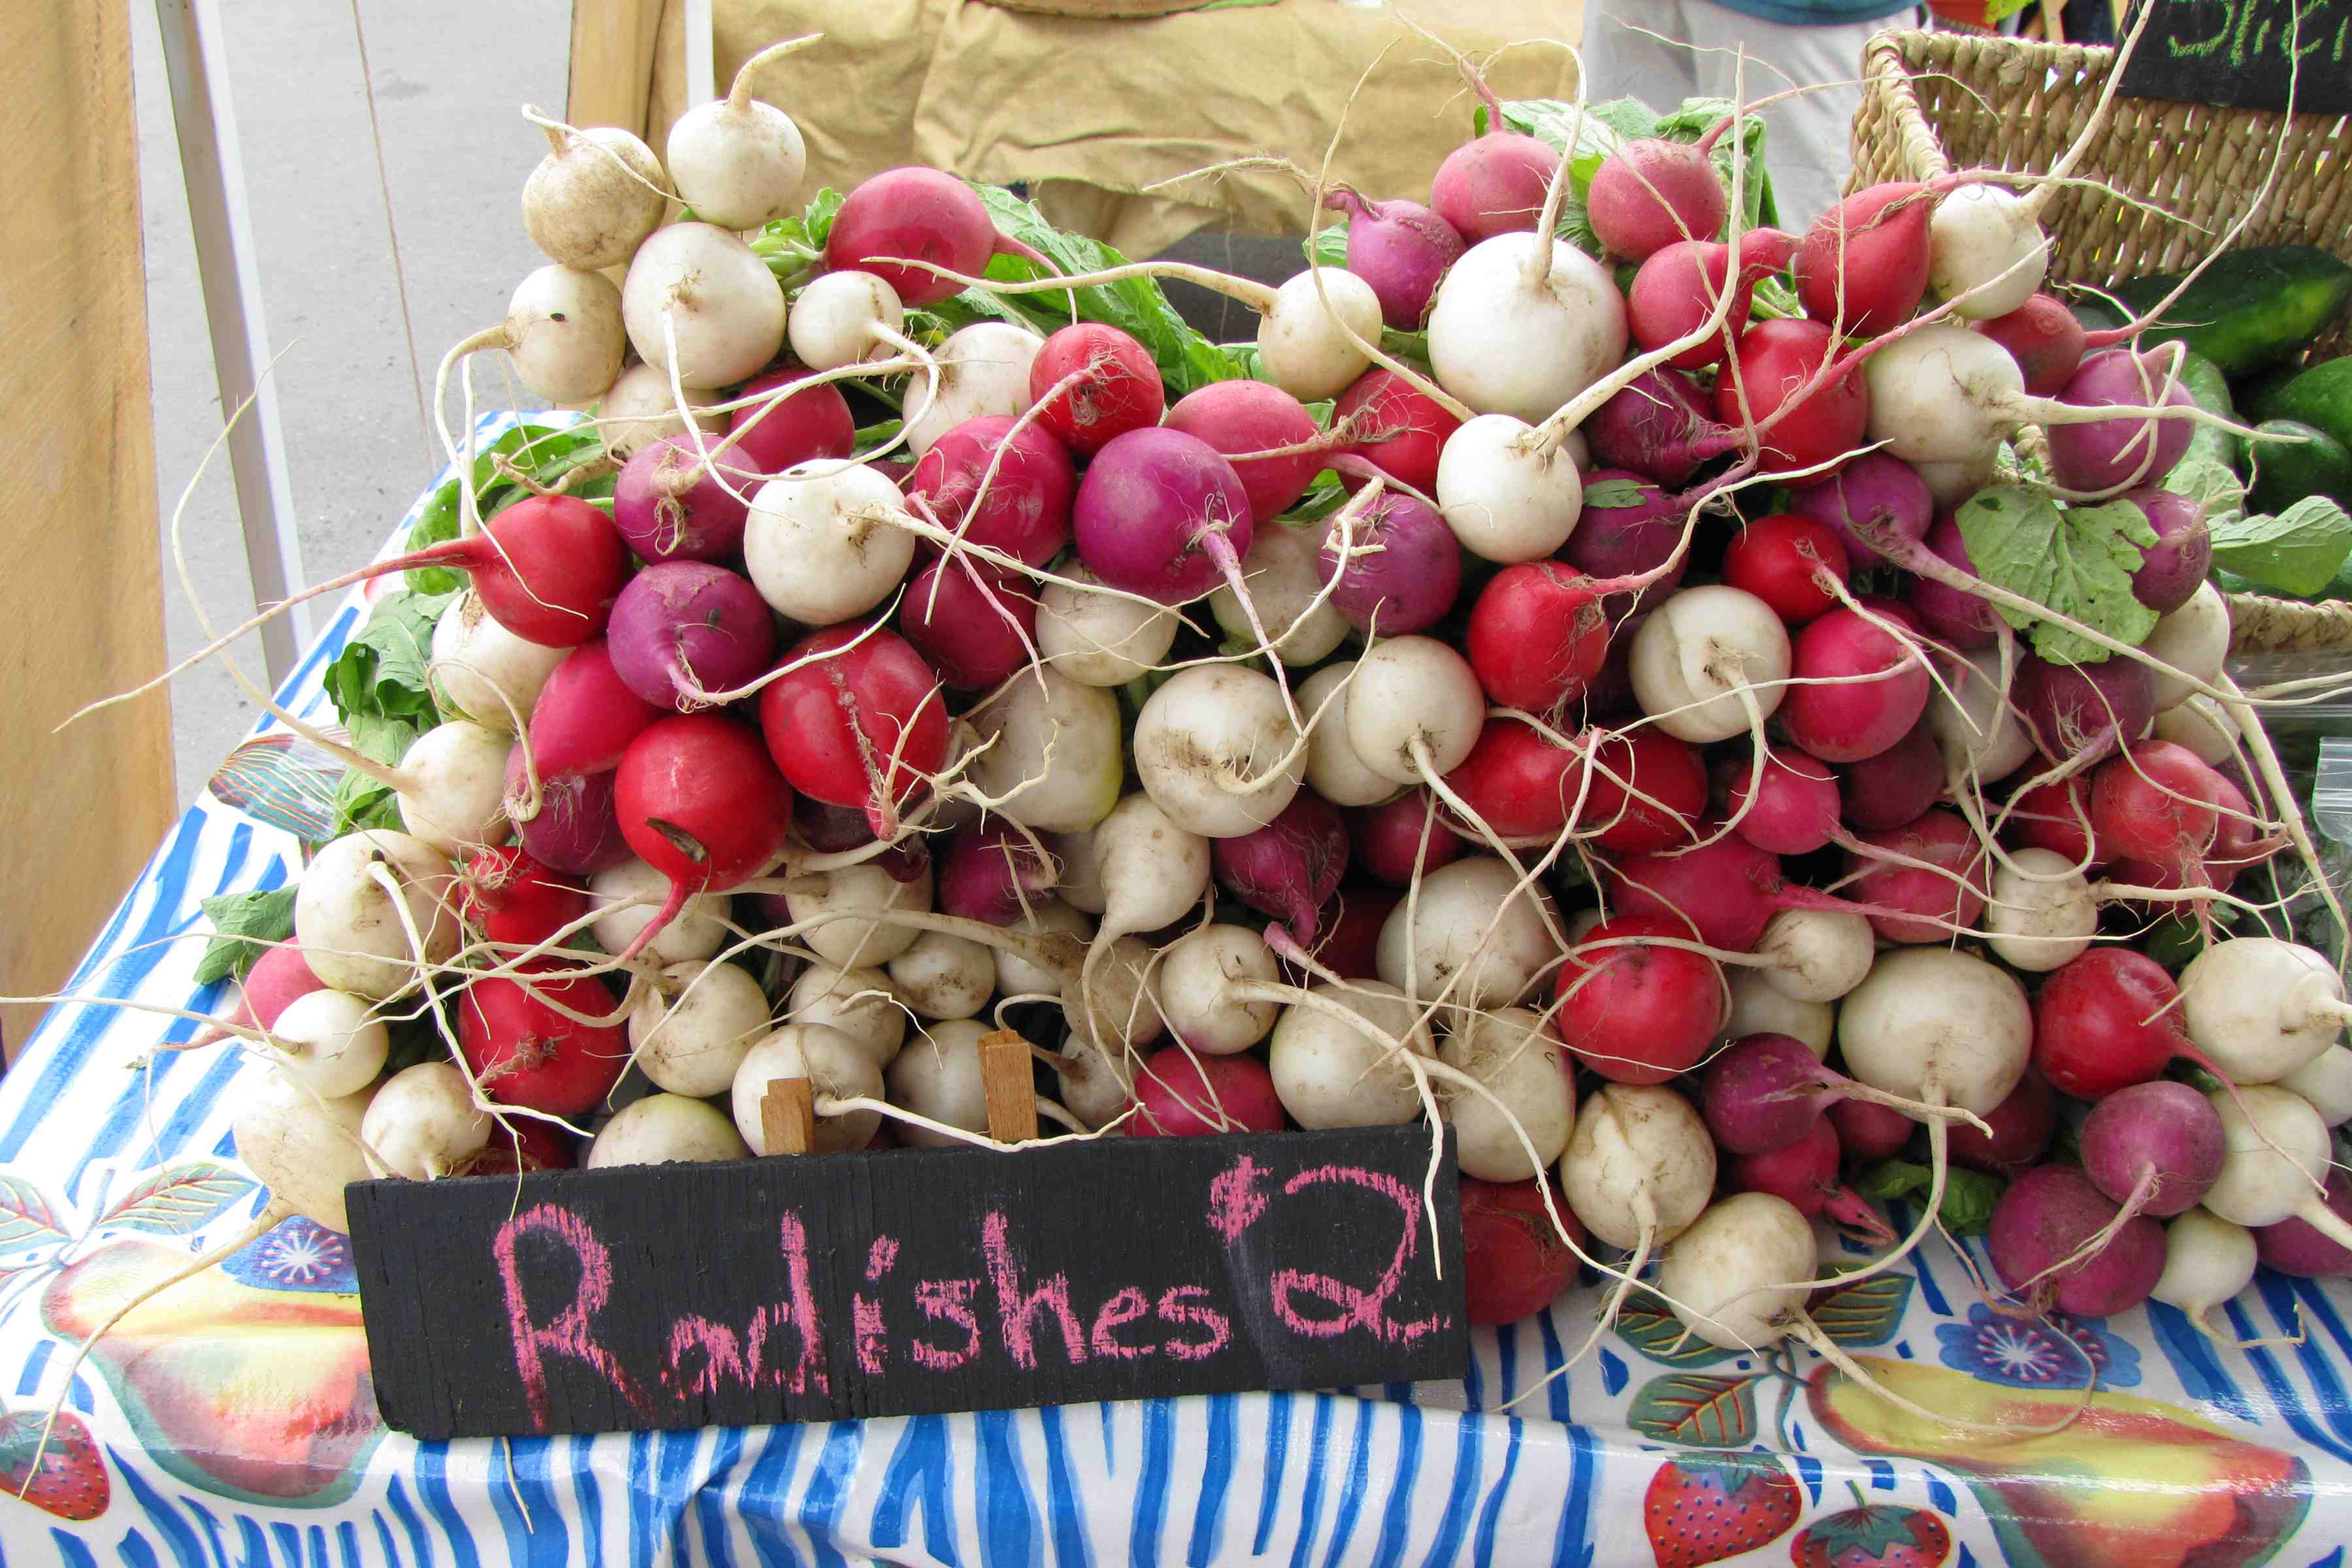 radishes at Farmer's market